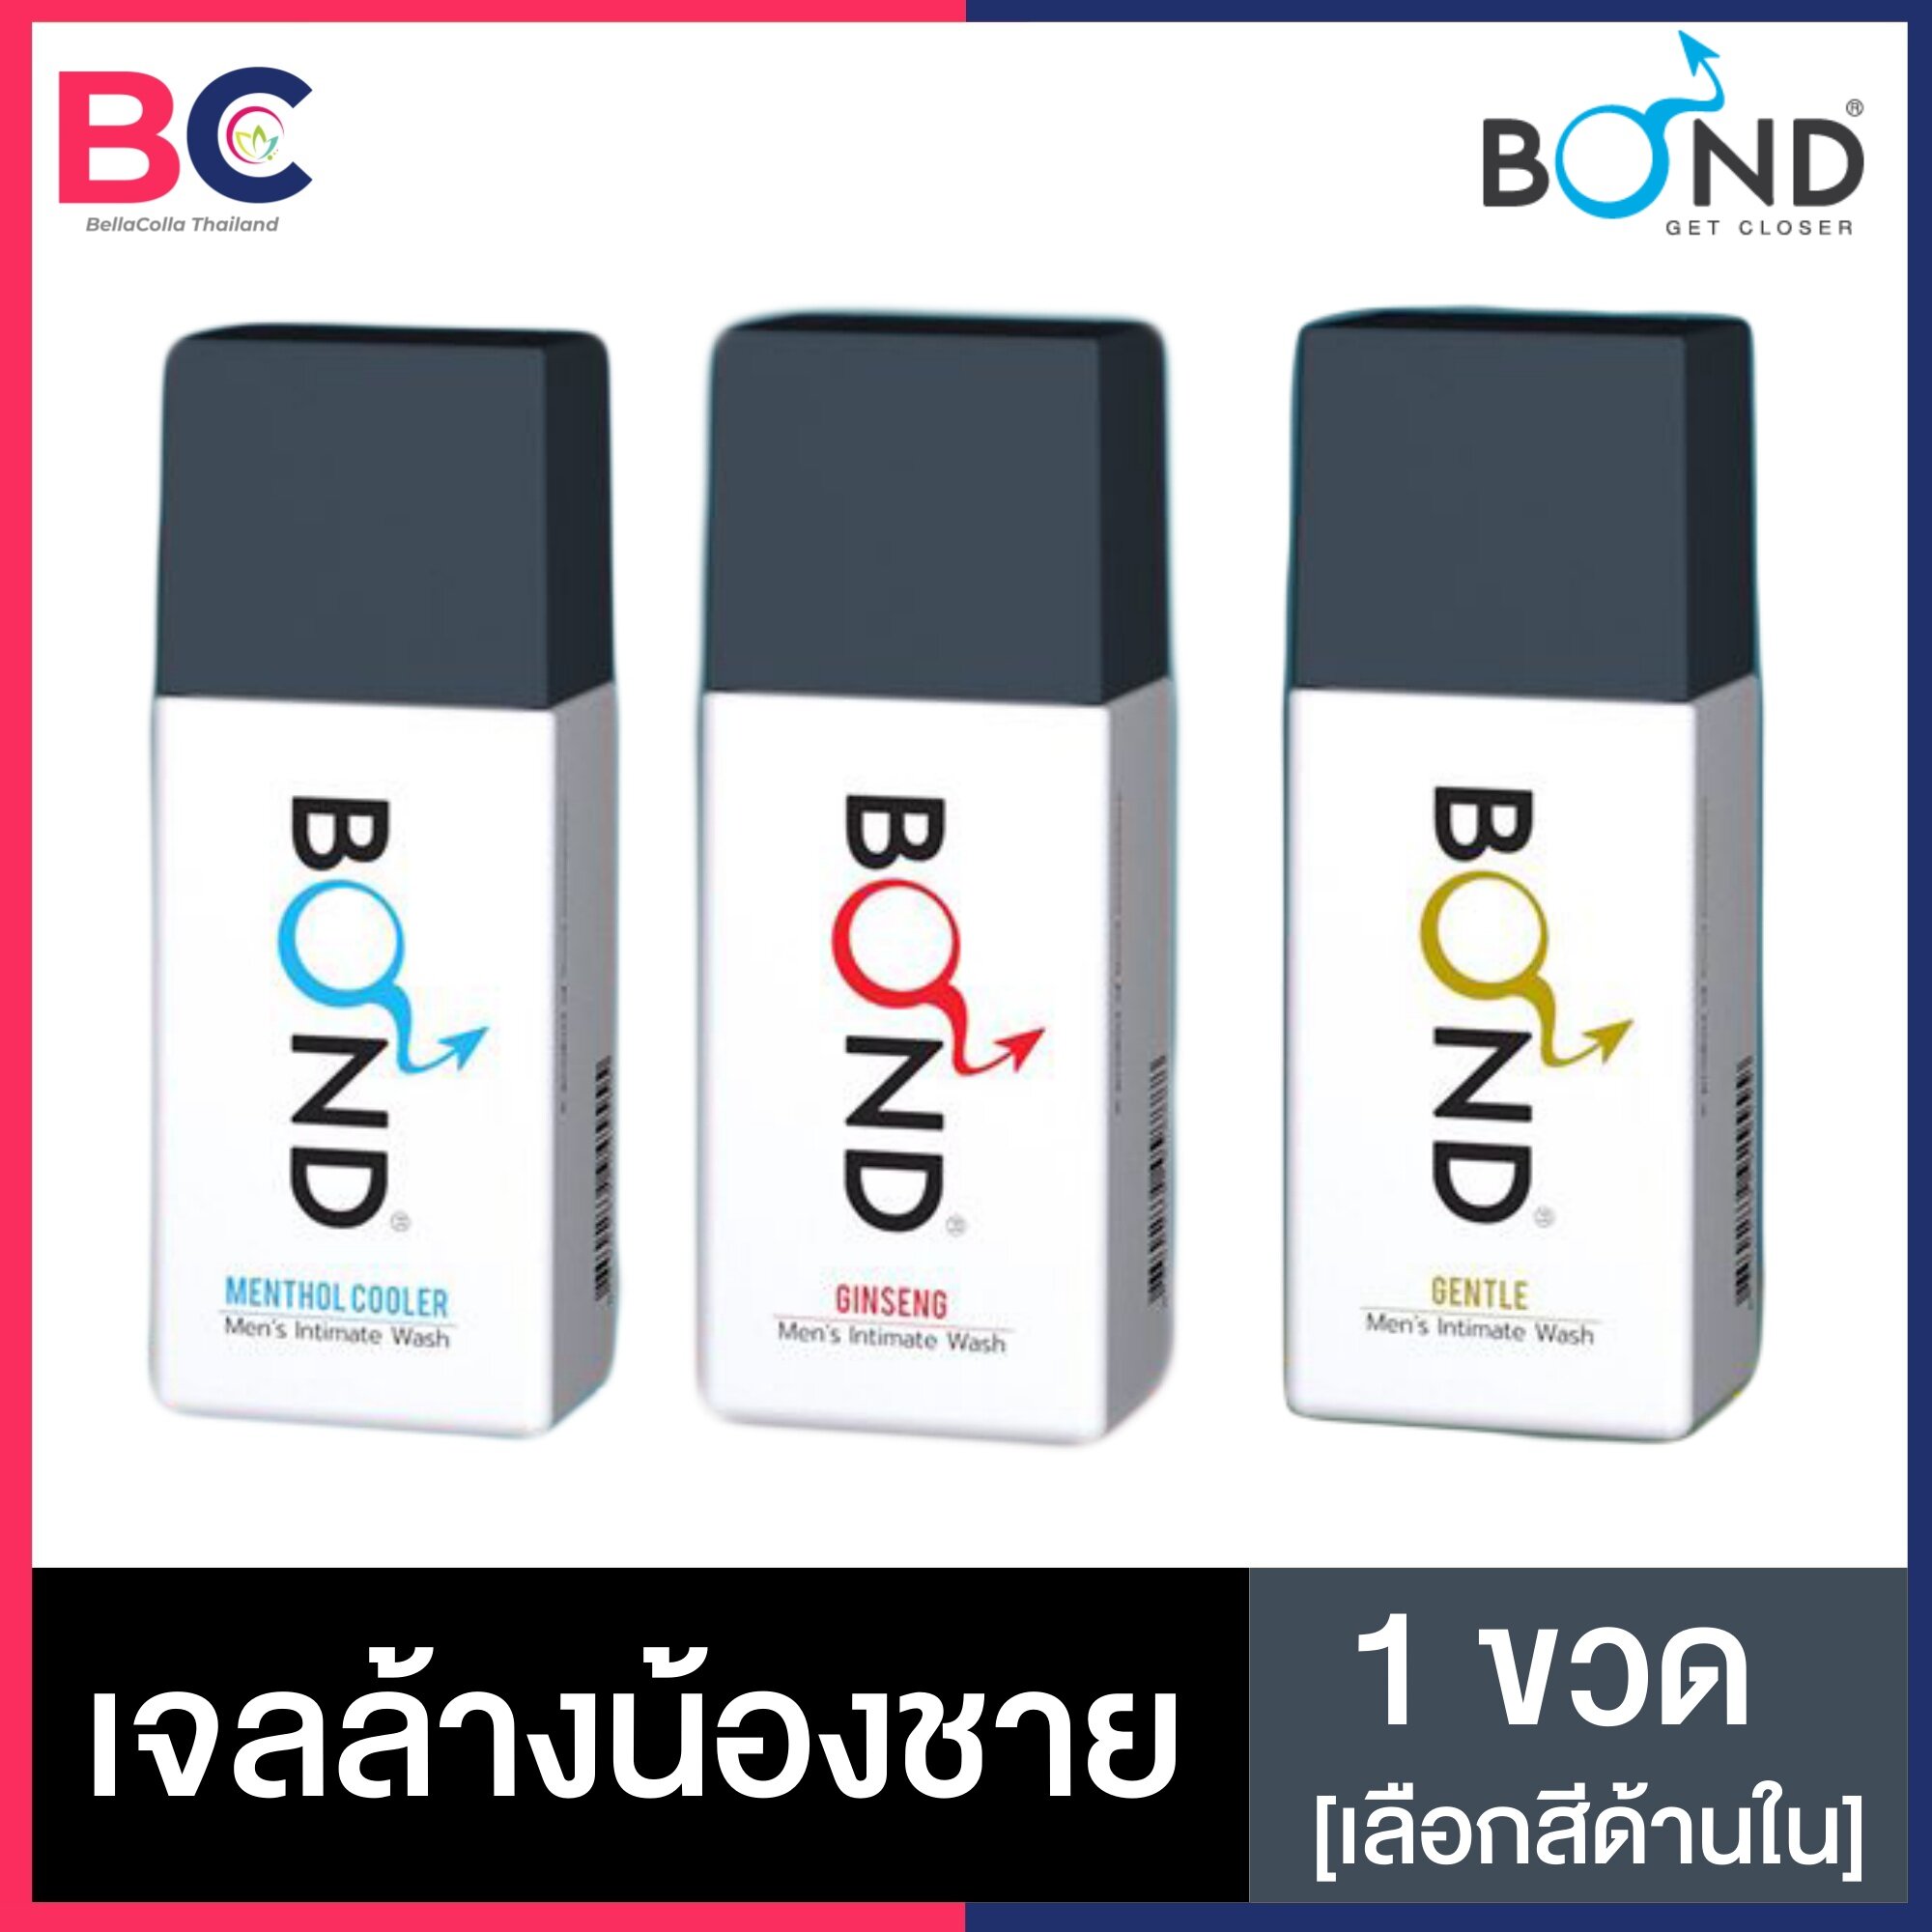 Bond Wash [มี 3 สูตร] [75 Ml. X 1 ขวด] บอนด์ วอช เมนทอล คูลเลอร์ เจลทำความสะอาดจุดซ่อนเร้นสำหรับผู้ชาย Bond Men Bellacolla Thailand. 